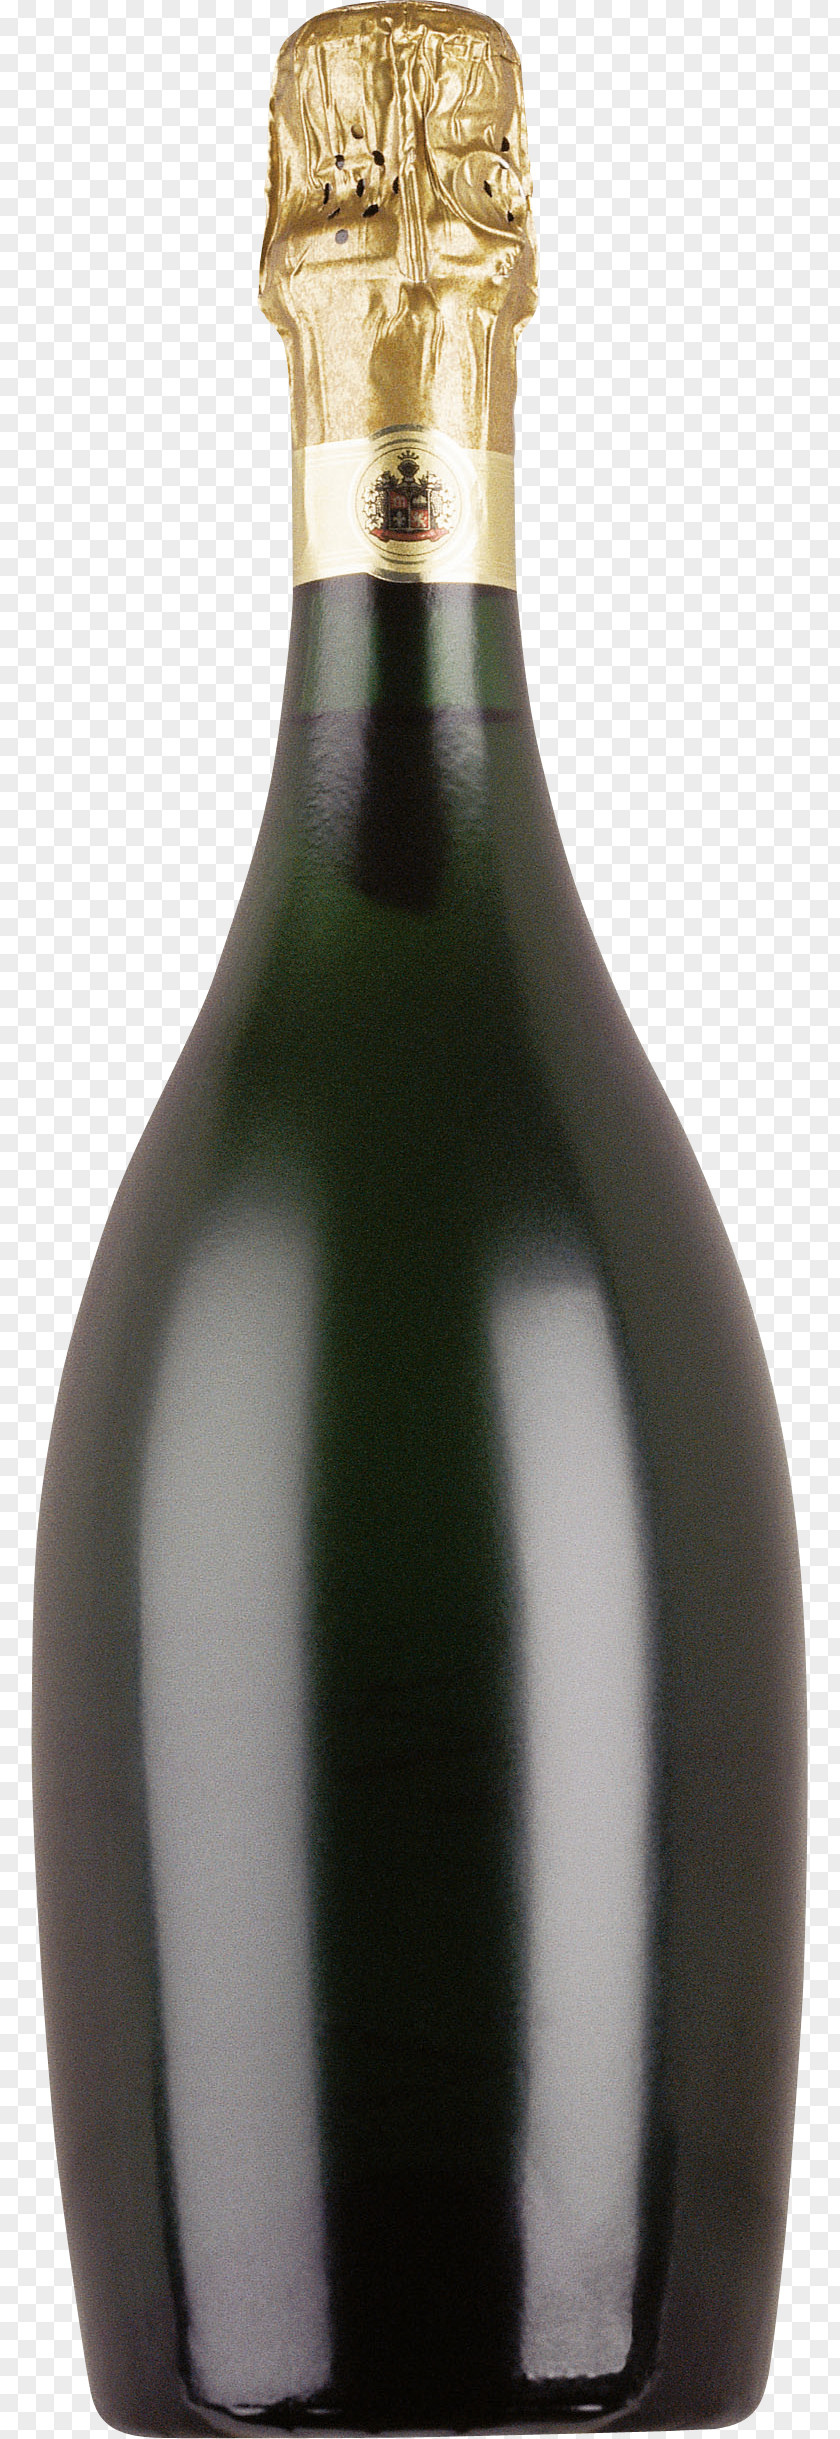 Champagne Bottle Image PNG